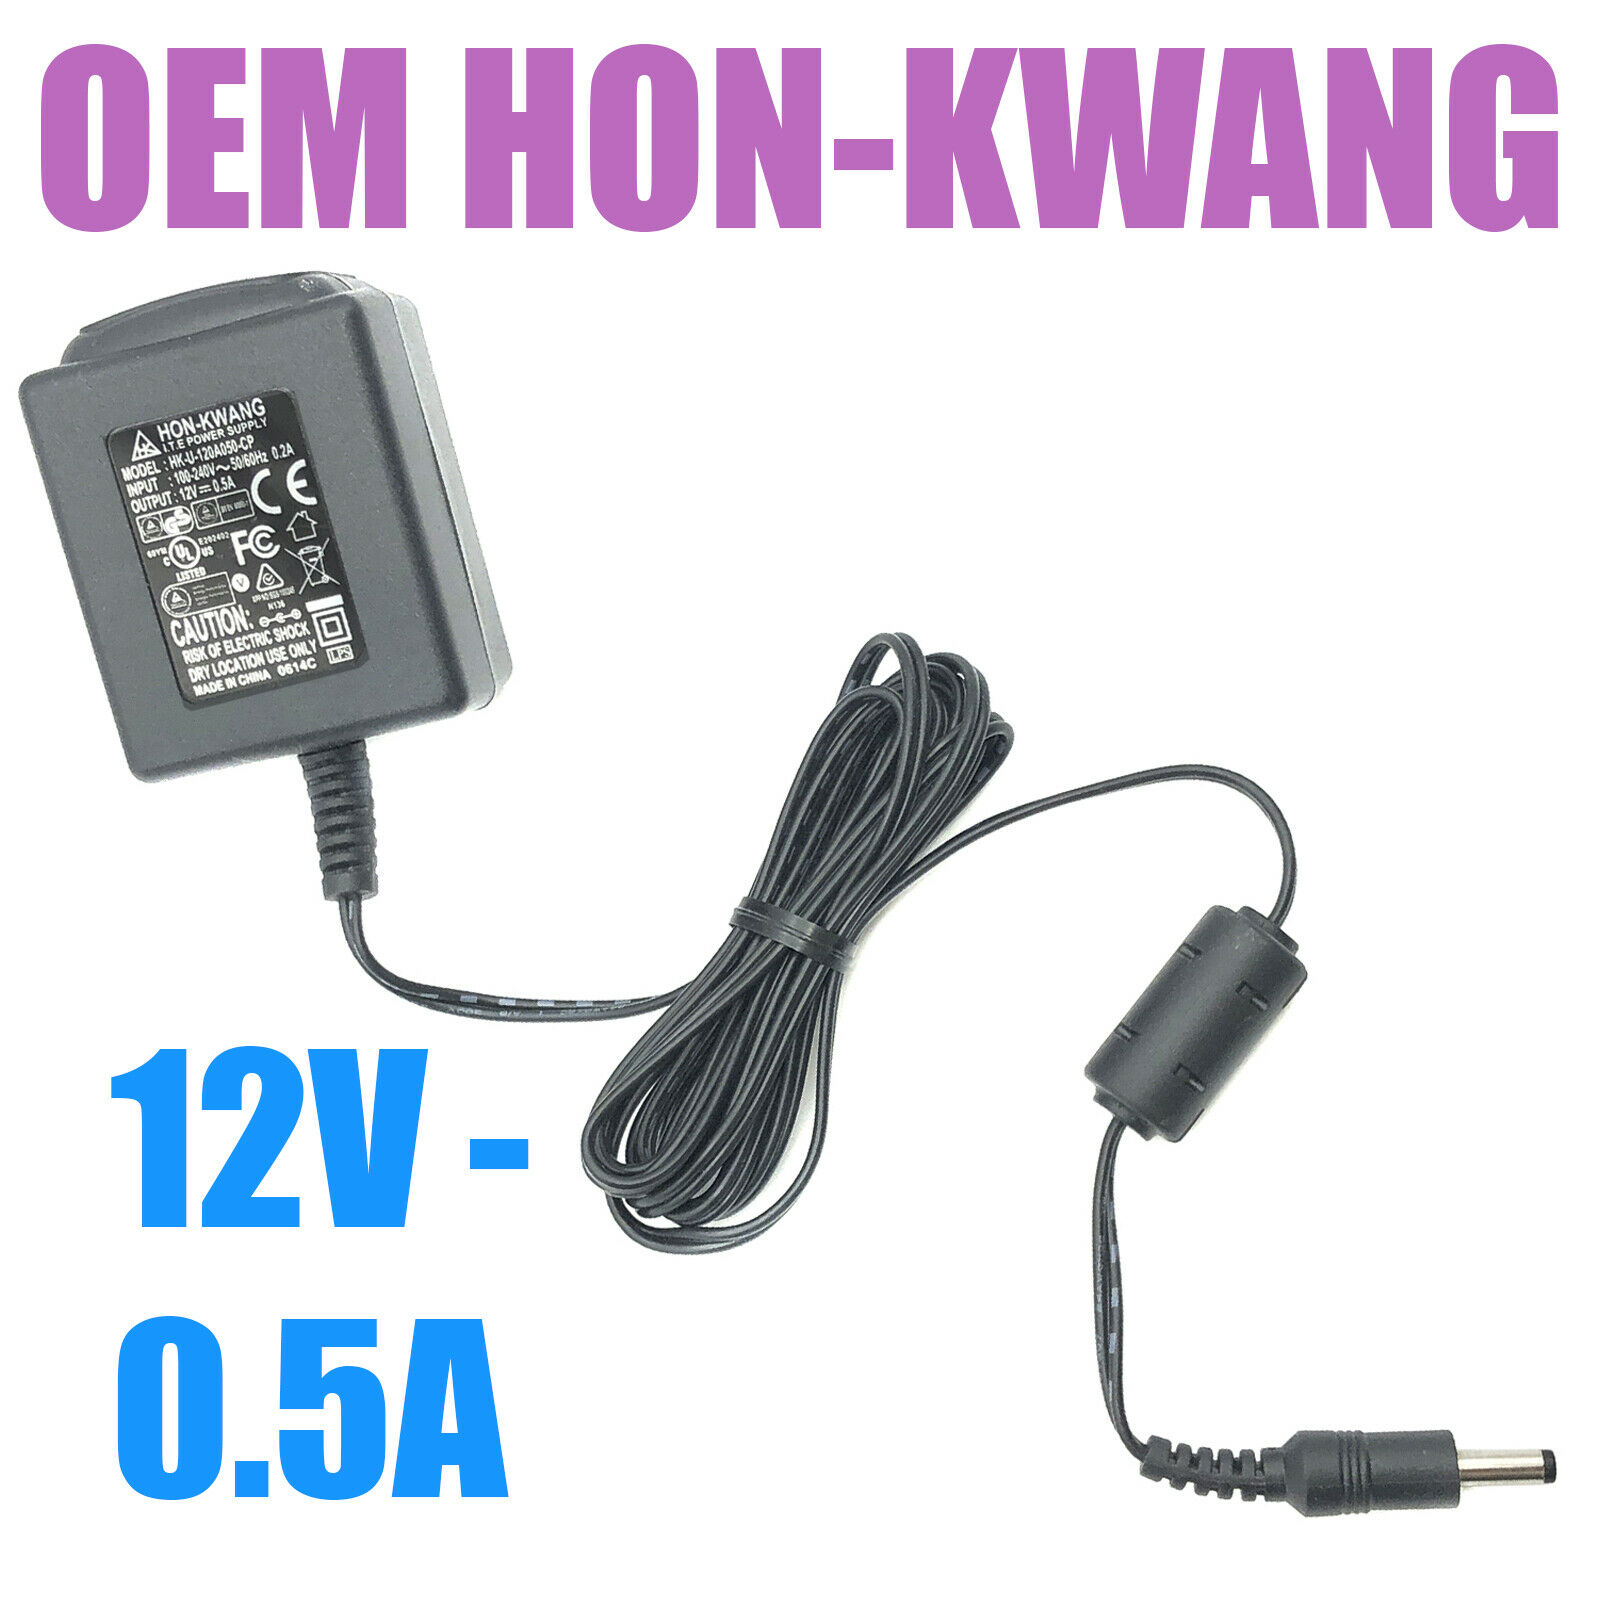 Genuine HON-KWANG AC Adapter HK-U-120A050-CP 12V 0.5A 500mA Power Supply Custom Bundle: No Color: Black Compatible B